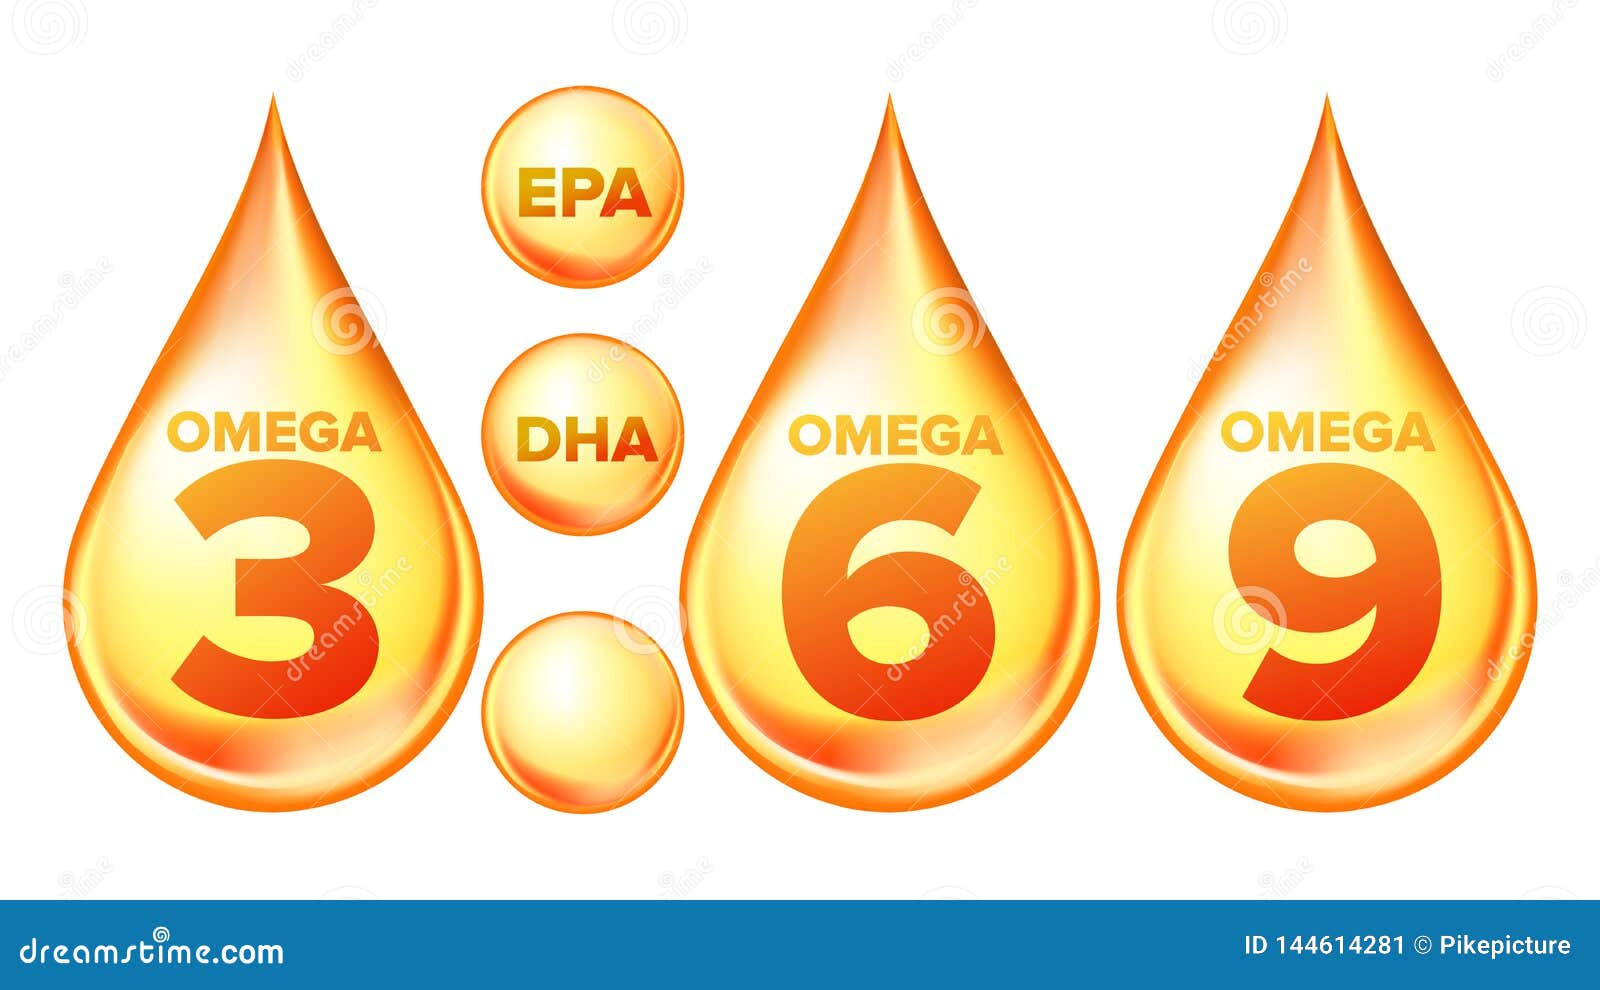 Omega Fatty Acid Epa Dha Vector Drops Set Stock Vector Illustration Of Diet Design 144614281